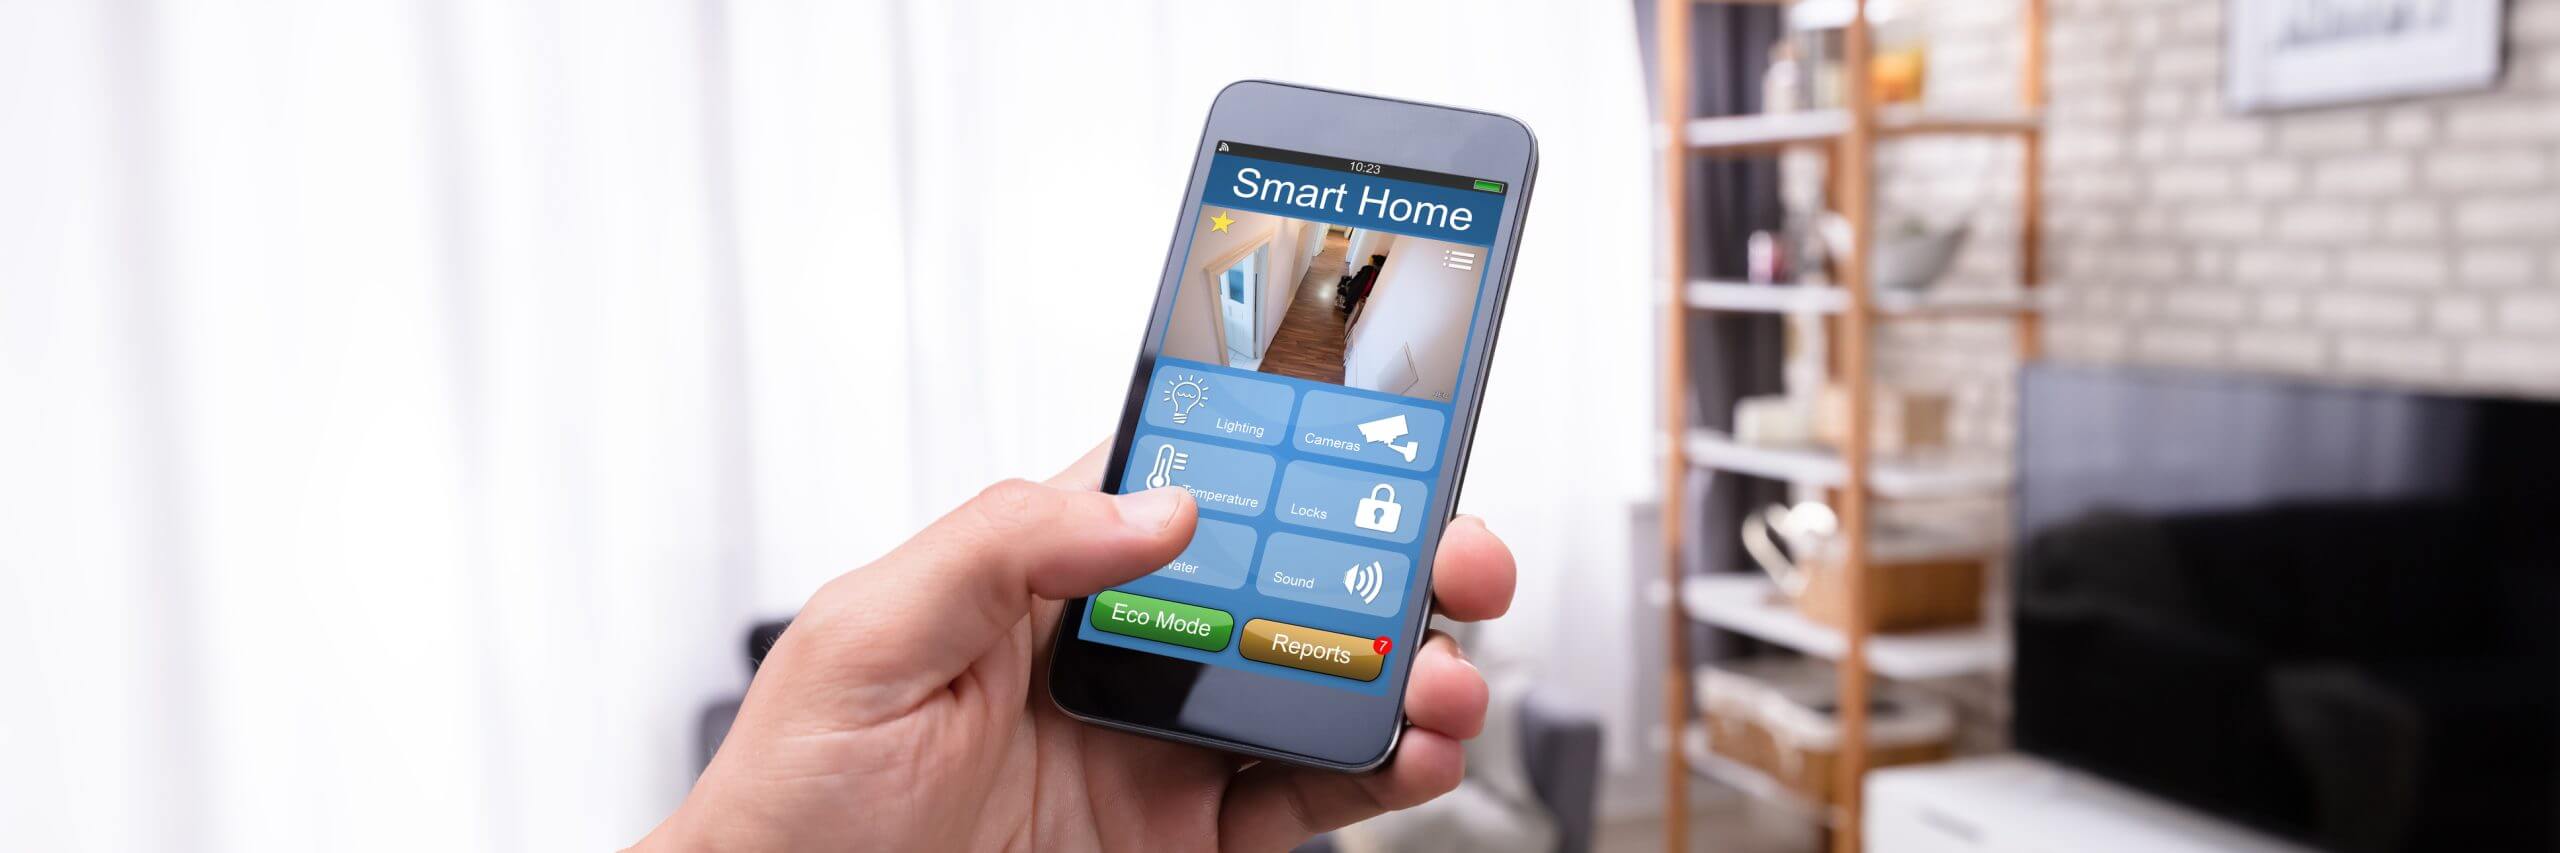 smart-home-systems-ovladanie-mobilom-tabletom-uvod-02